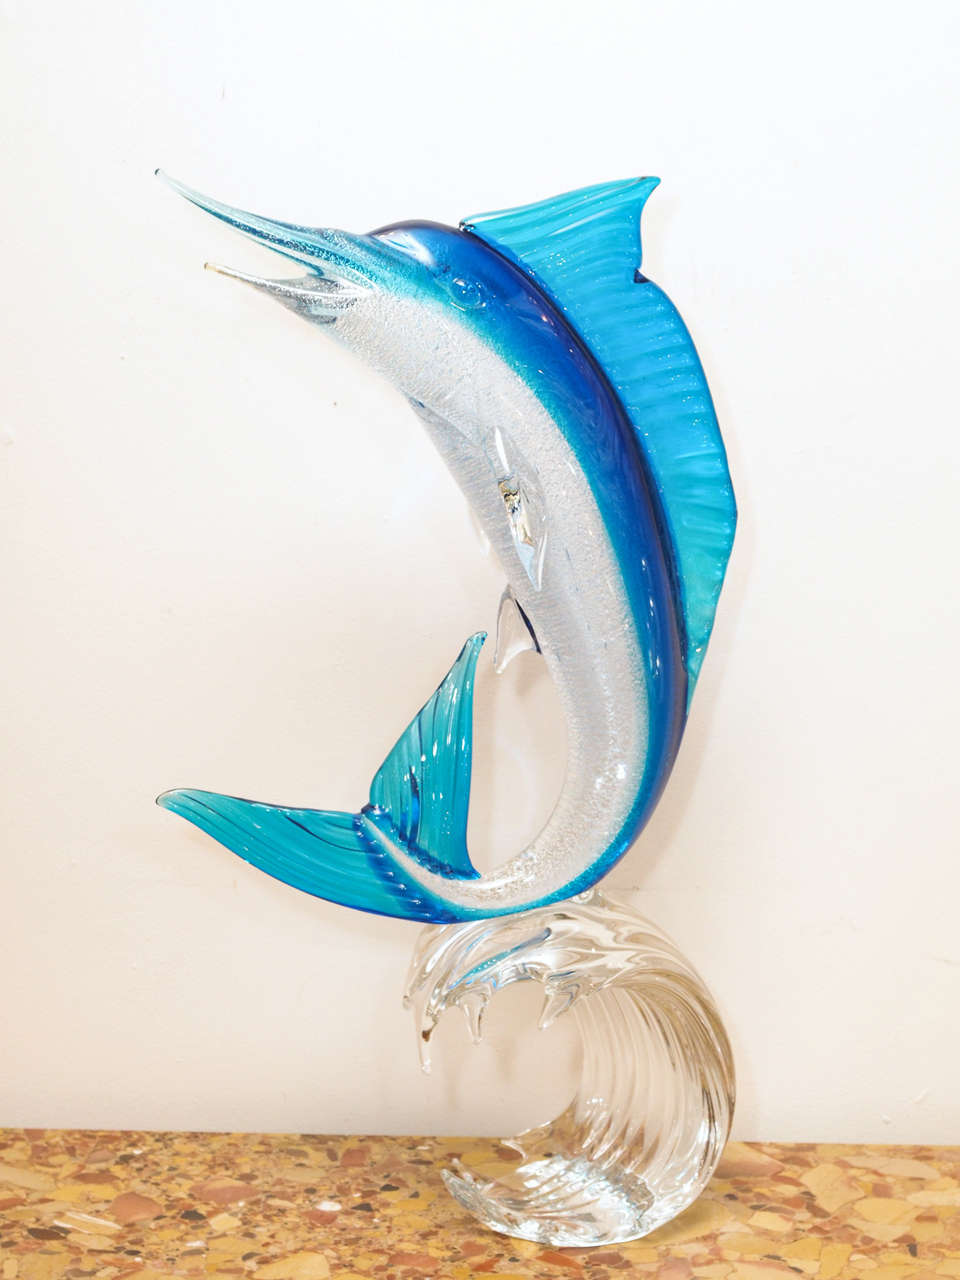 Murano glass sculpture depecting a Blu Marlin/Sail Fish by glassmaster Oscar Zanetti.